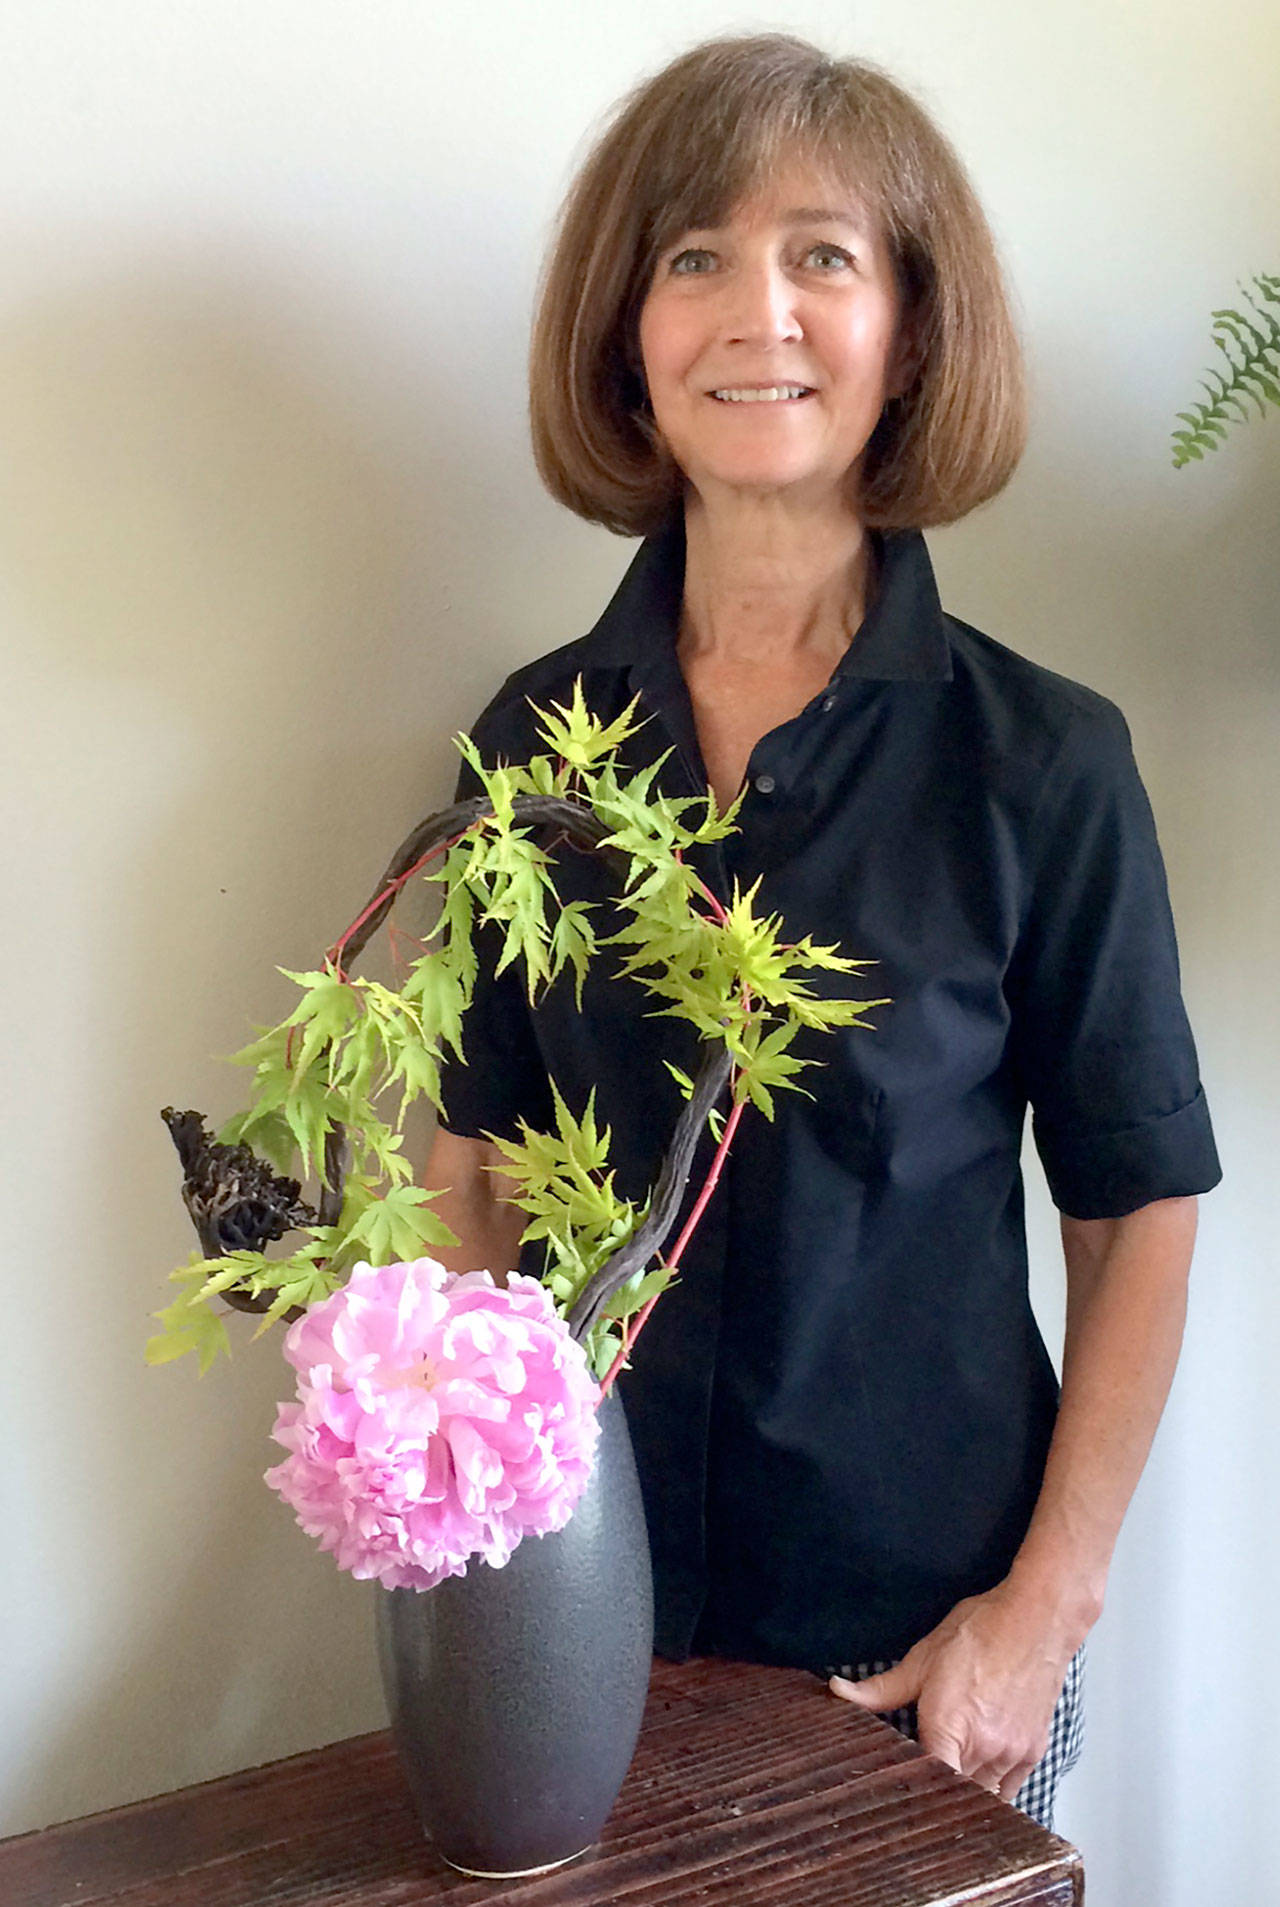 Janie Redifer shows an example of Ikebana, Japanese flower arranging.